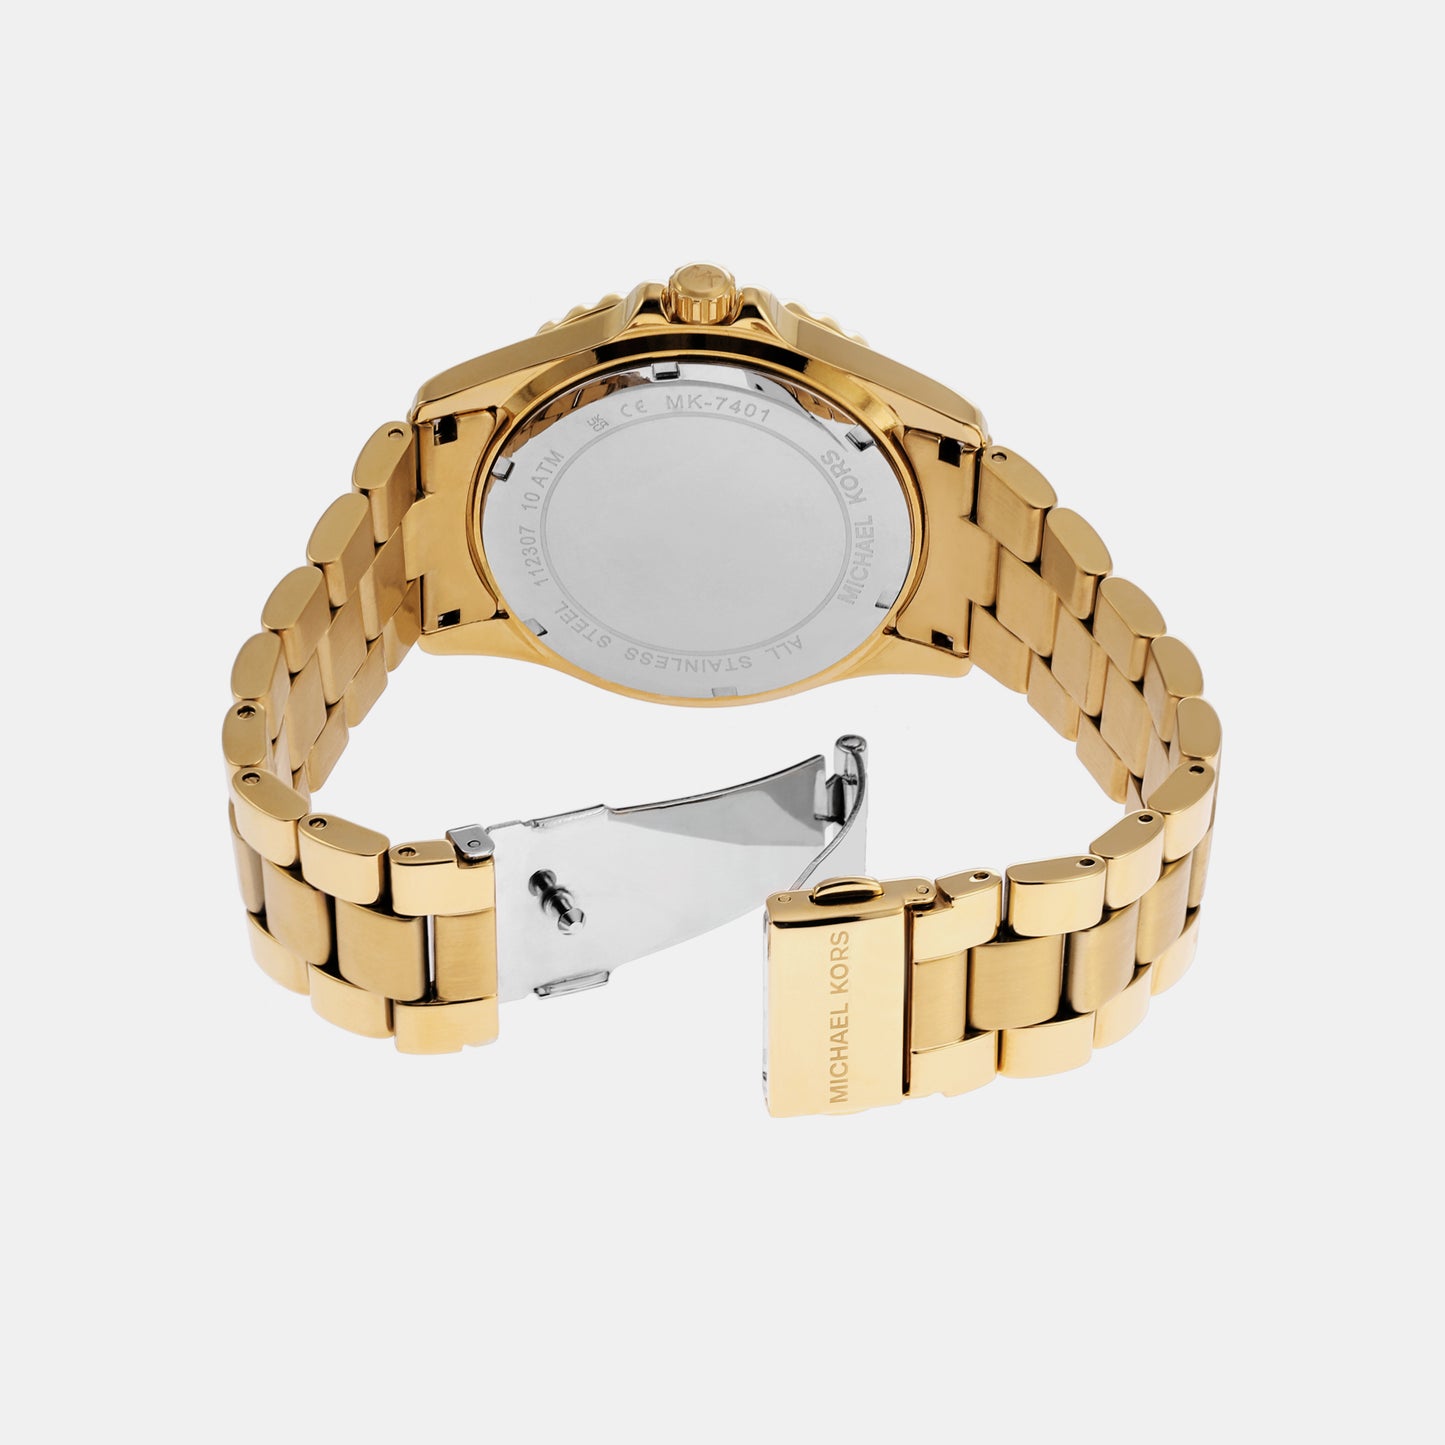 Women's Everest Three-Hand Gold-Tone Stainless Steel Watch MK7401